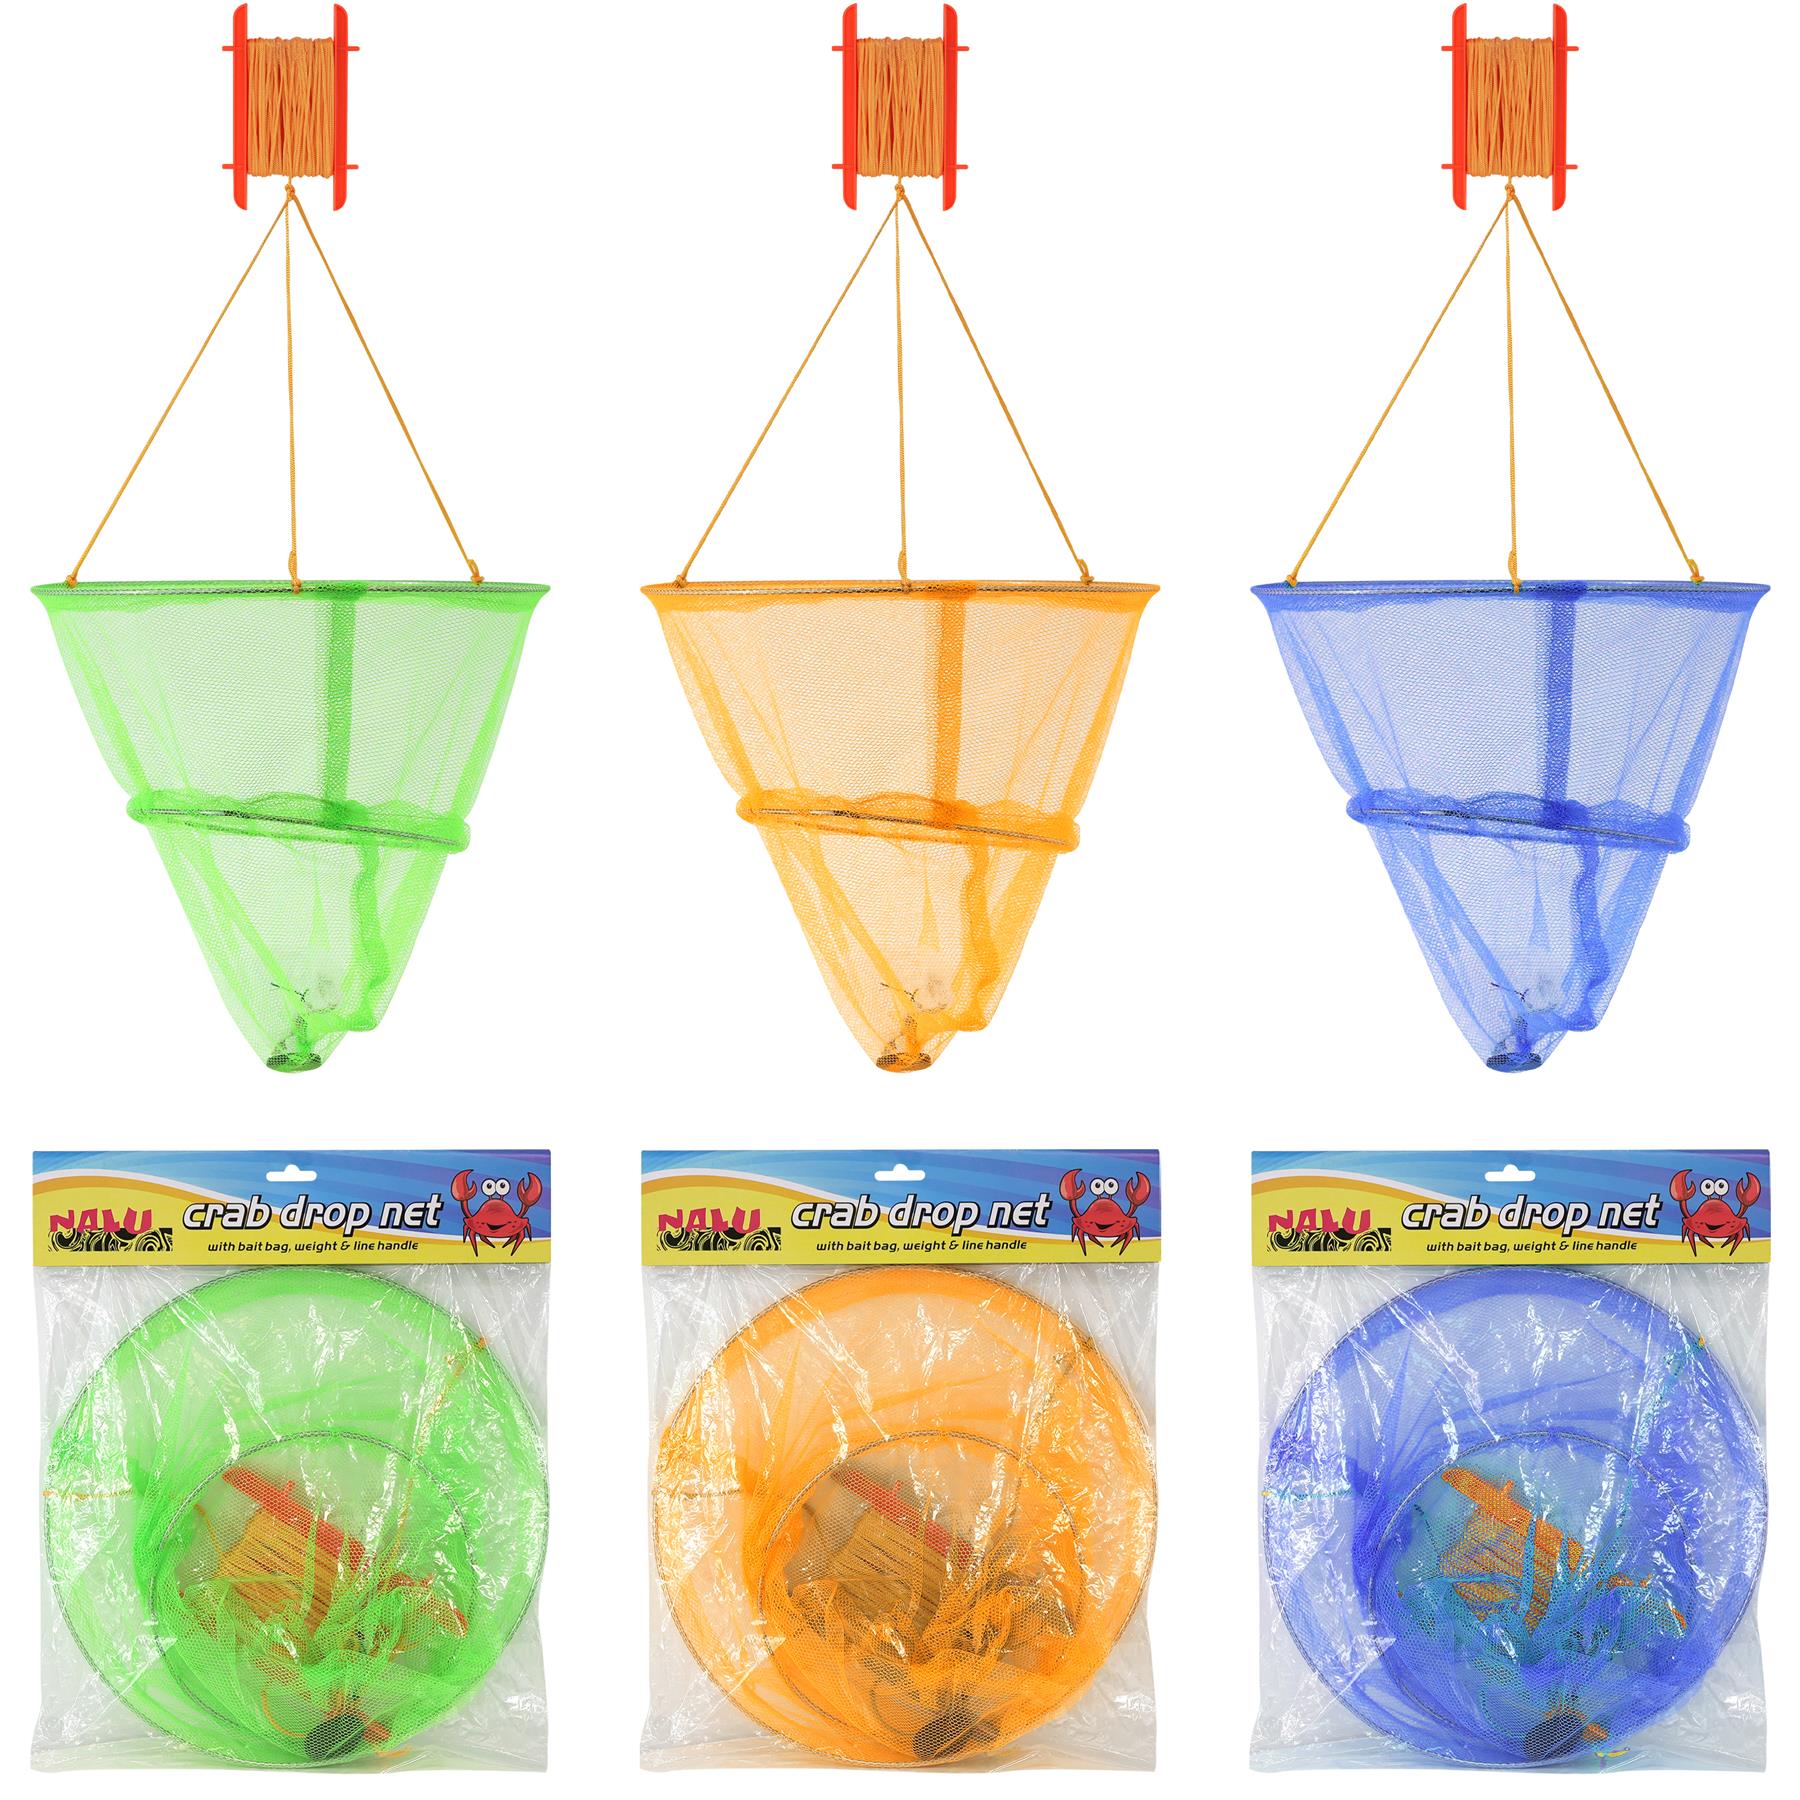 The Magic Toy Shop Crab Drop Net Crabbing Net Bait Bag Holder w/ Rope & Hand Line Fun Kids Fishing